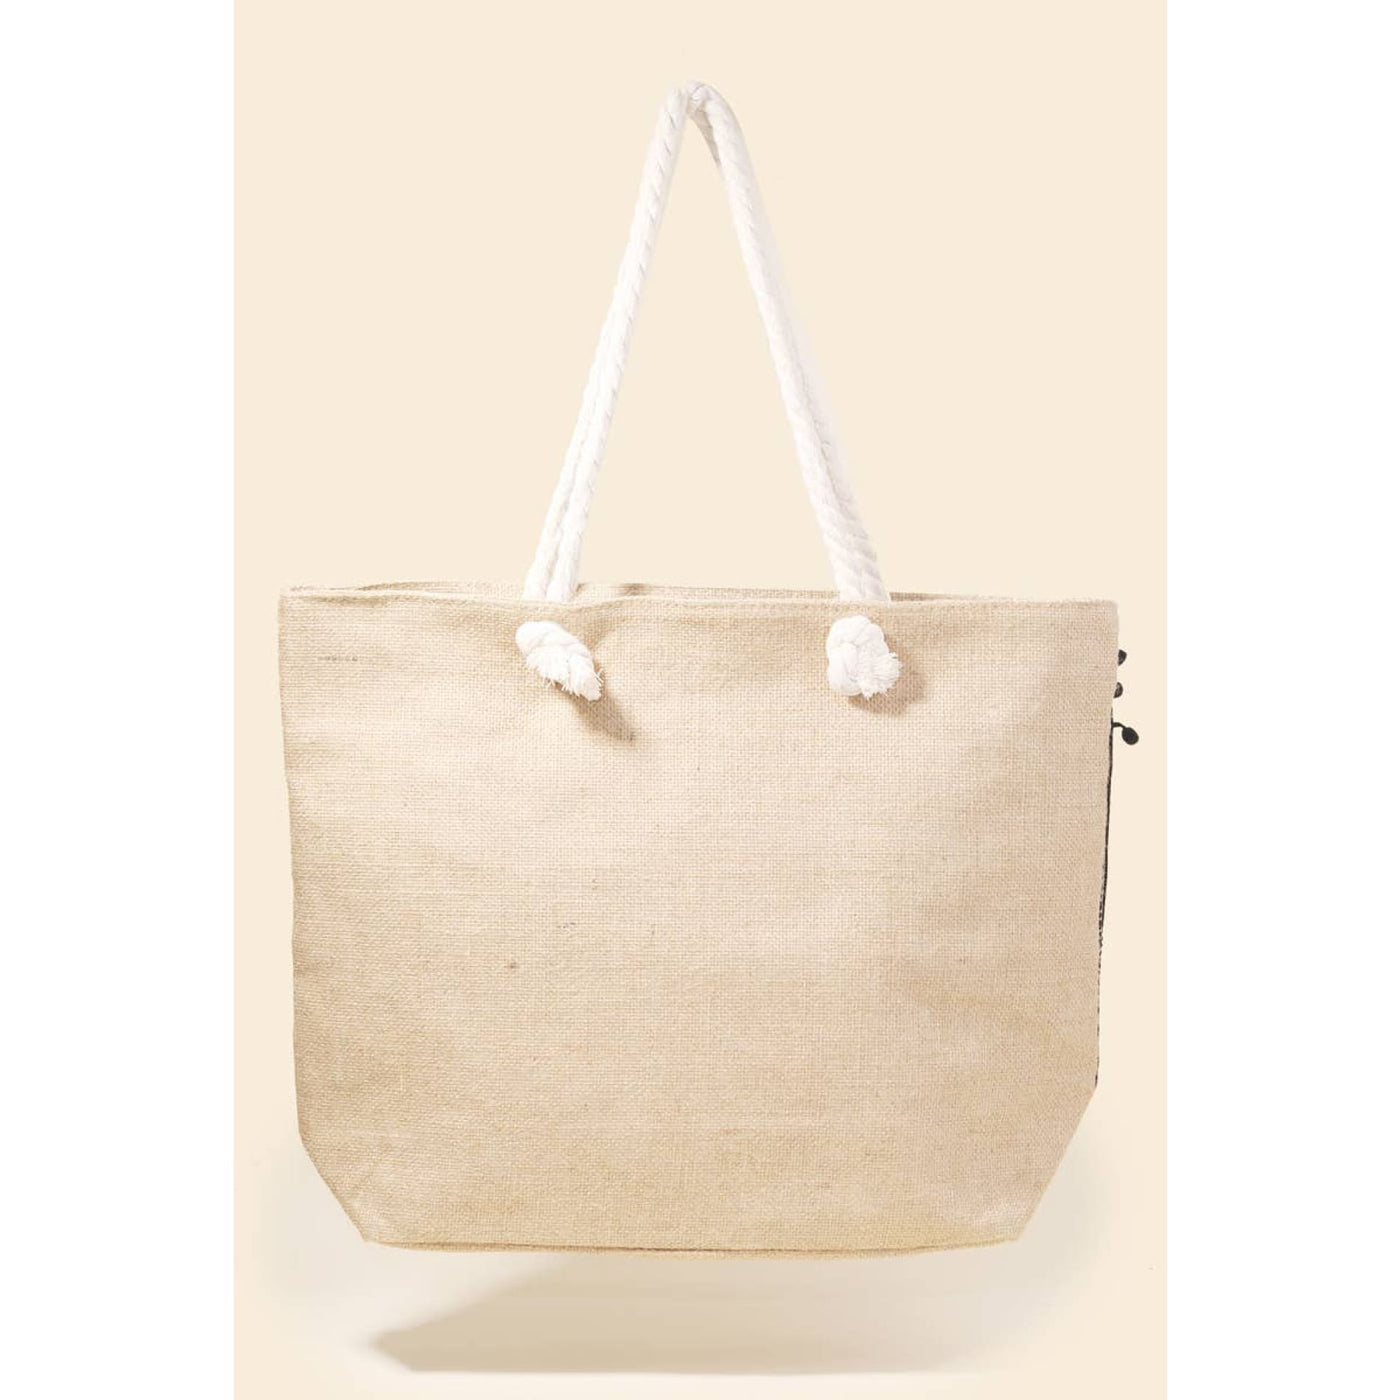 Boho Floral Tote Bag - 200 Handbags